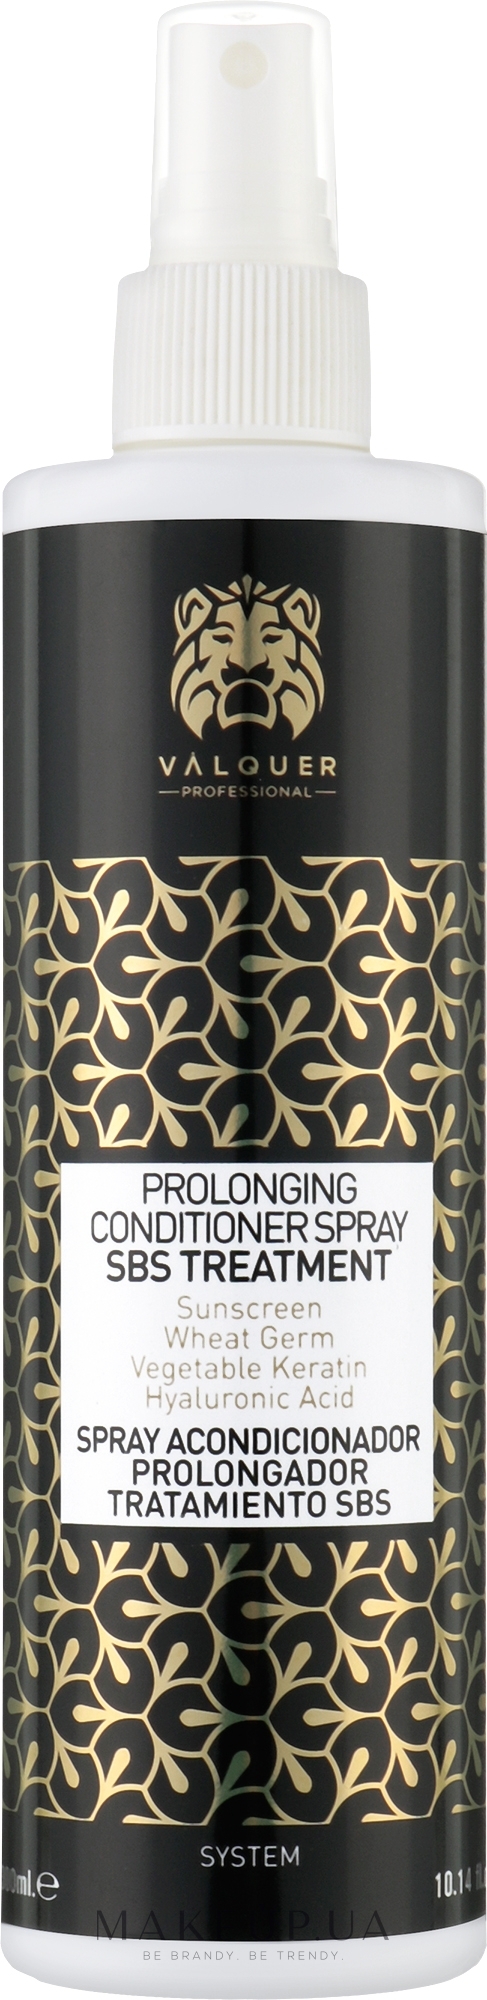 Зміцнювальний кондиціонер-спрей для волосся - Valquer Prolonging Conditioner Spray Sbs Divinityeffect — фото 300ml